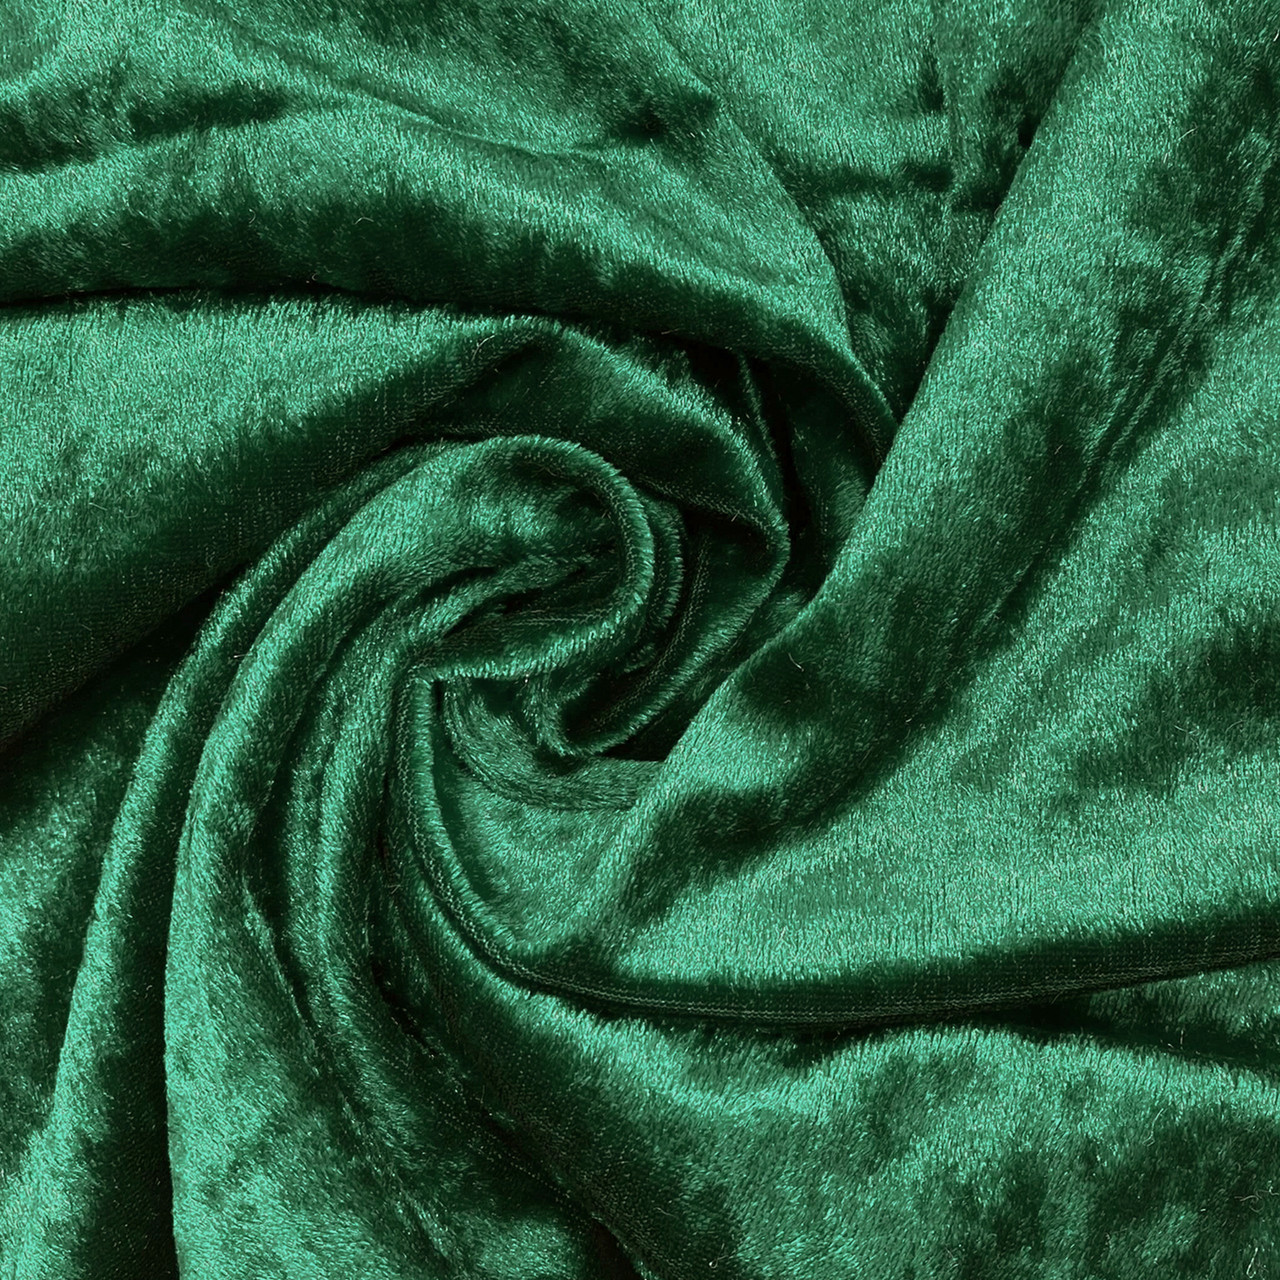 20 inch Crushed Velvet Napkin Emerald Green, Size: 20 x 20